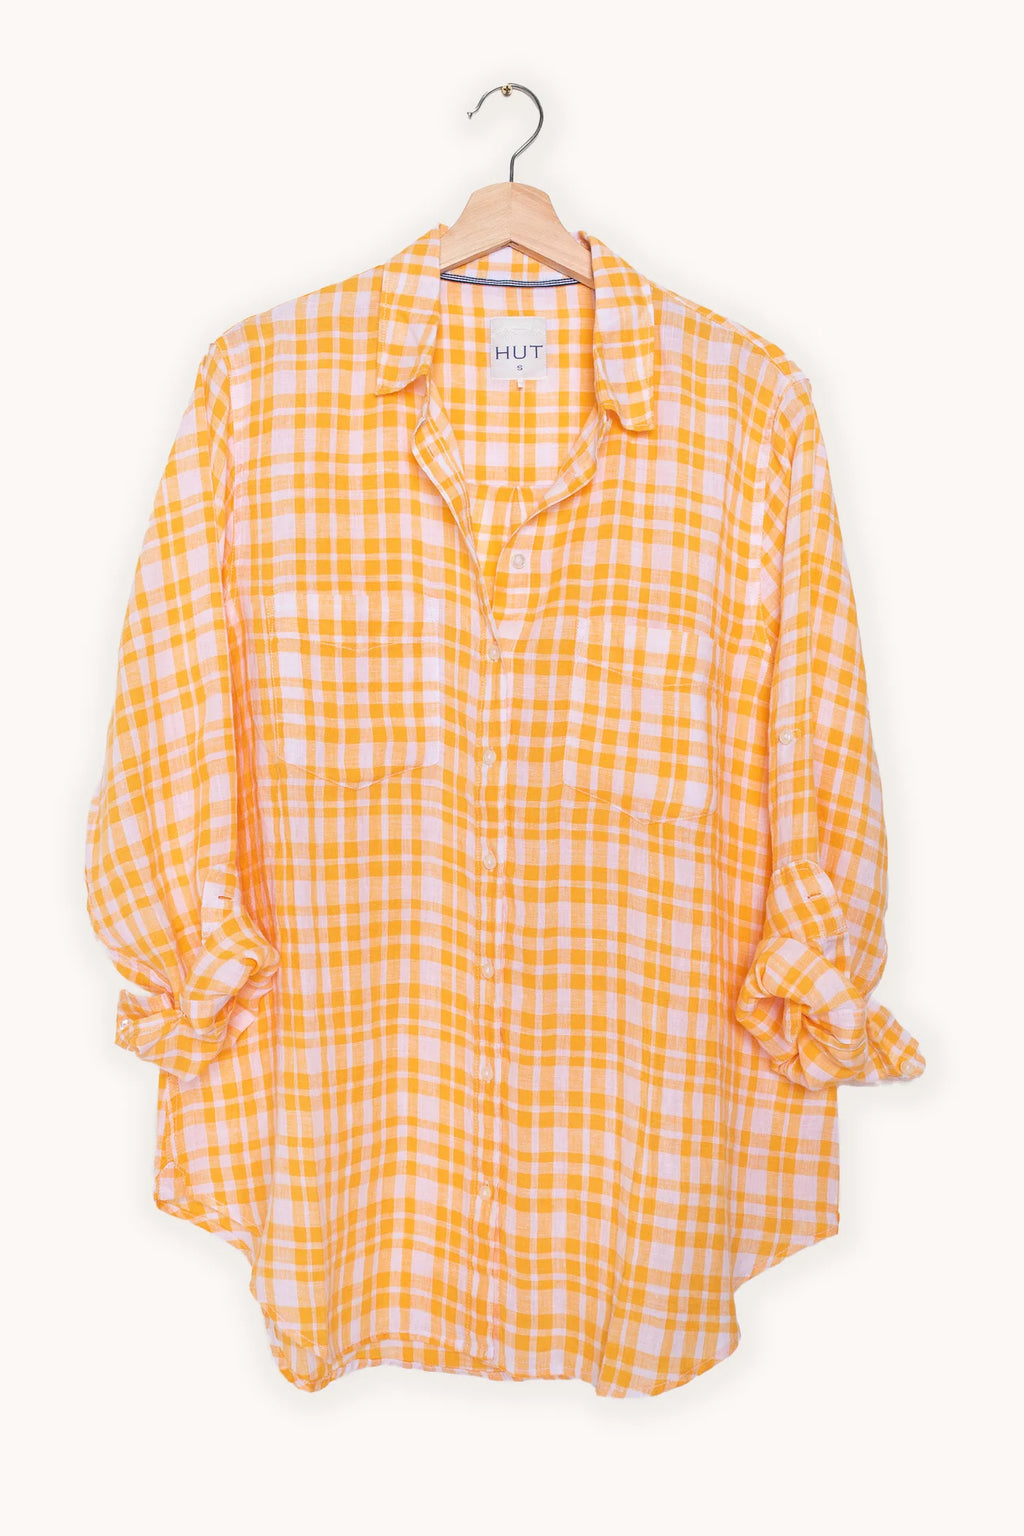 Hut Clothing Boyfriend Linen Shirt Saffron Check